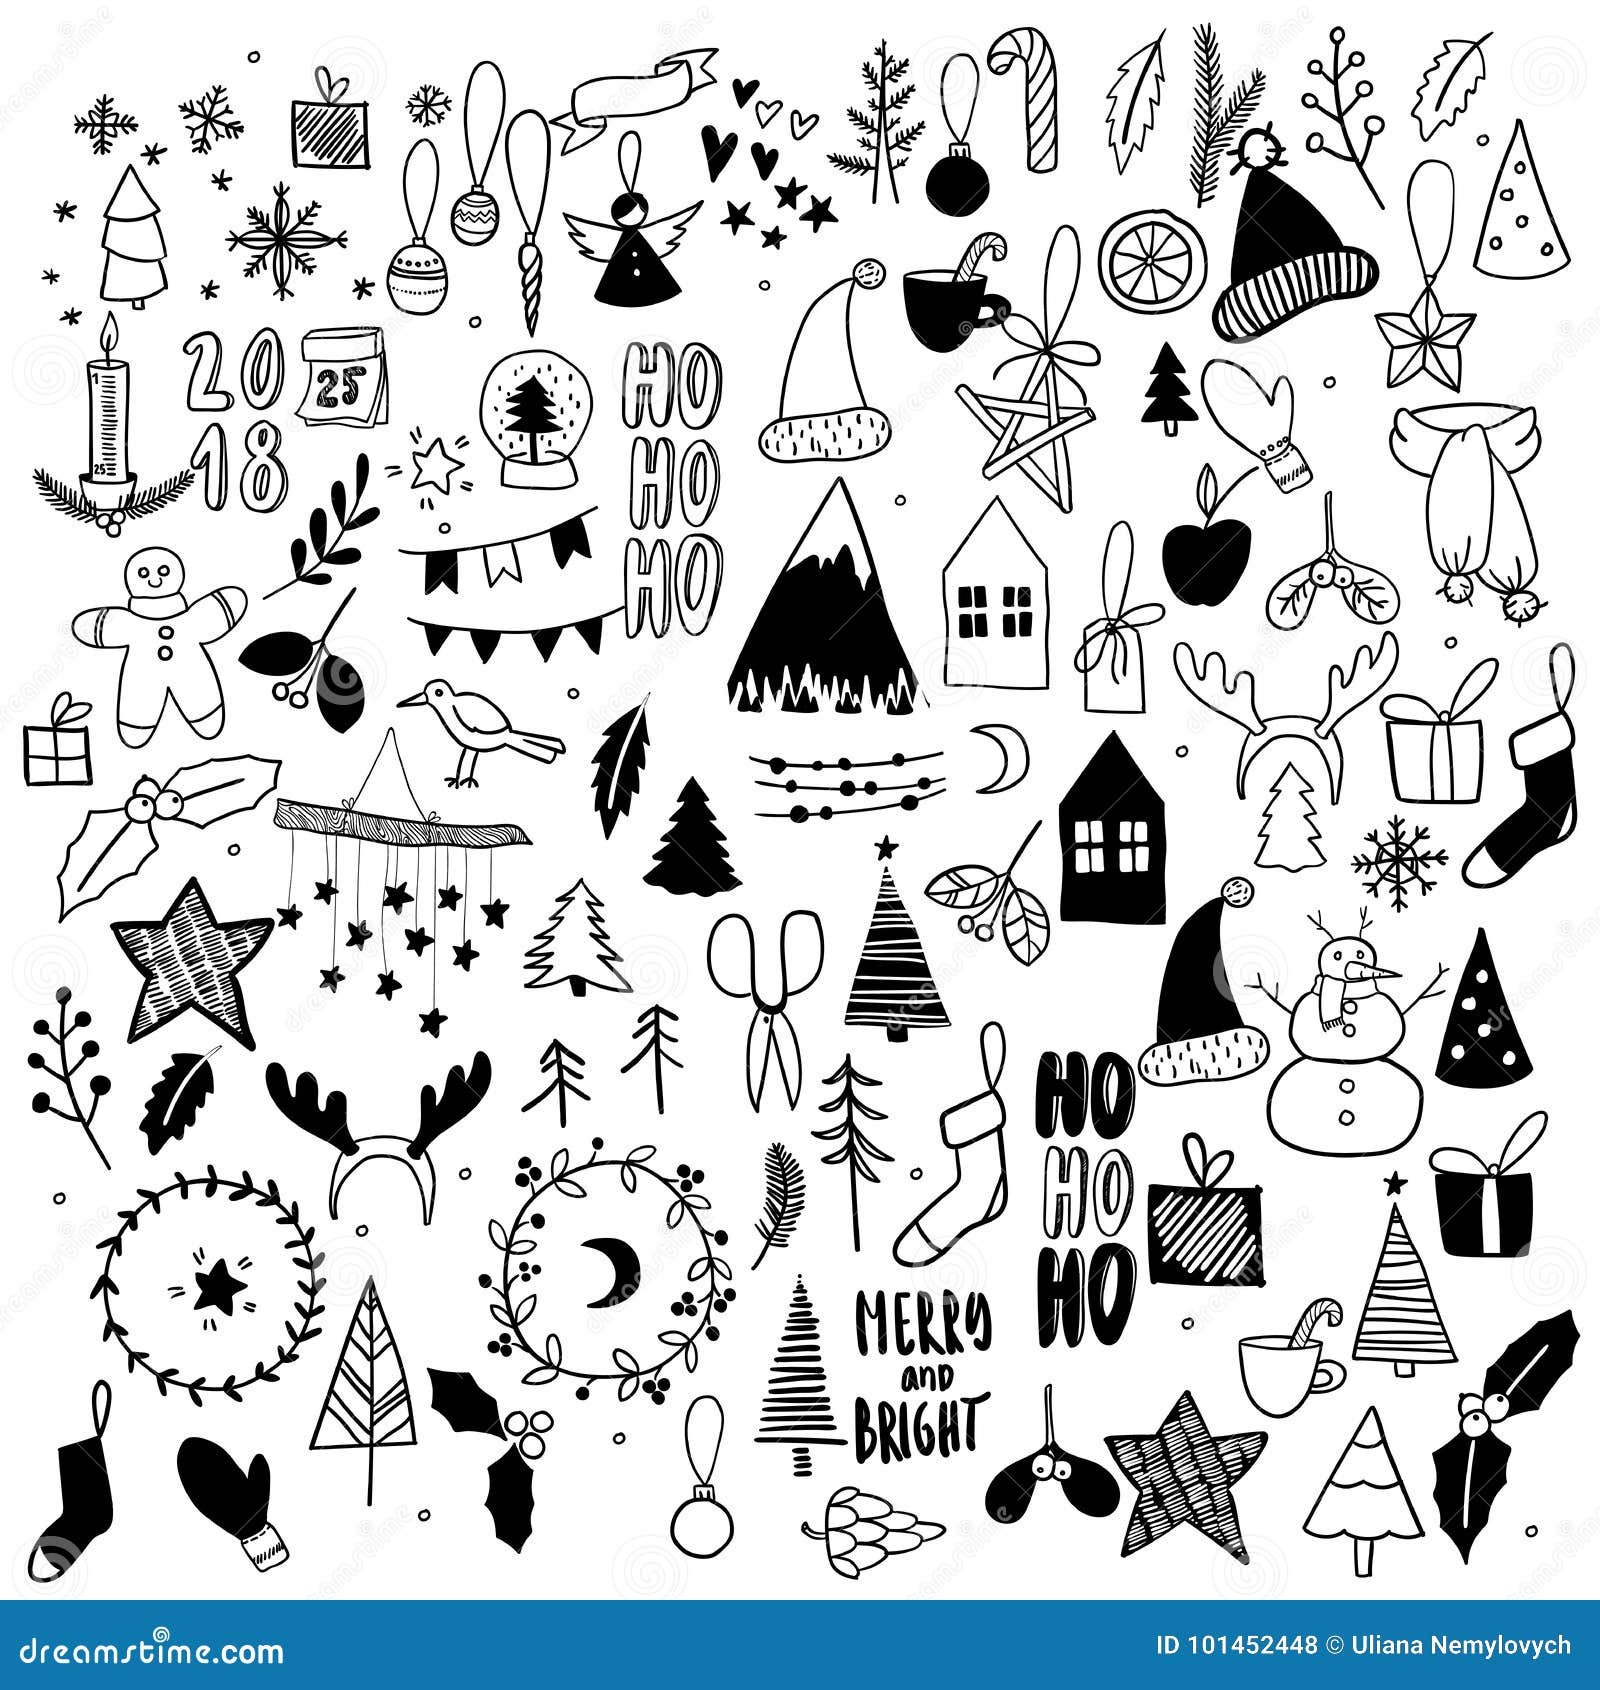 Big set of Christmas doodles Hand drawn vector icons Xmas and New Year scrapbooking